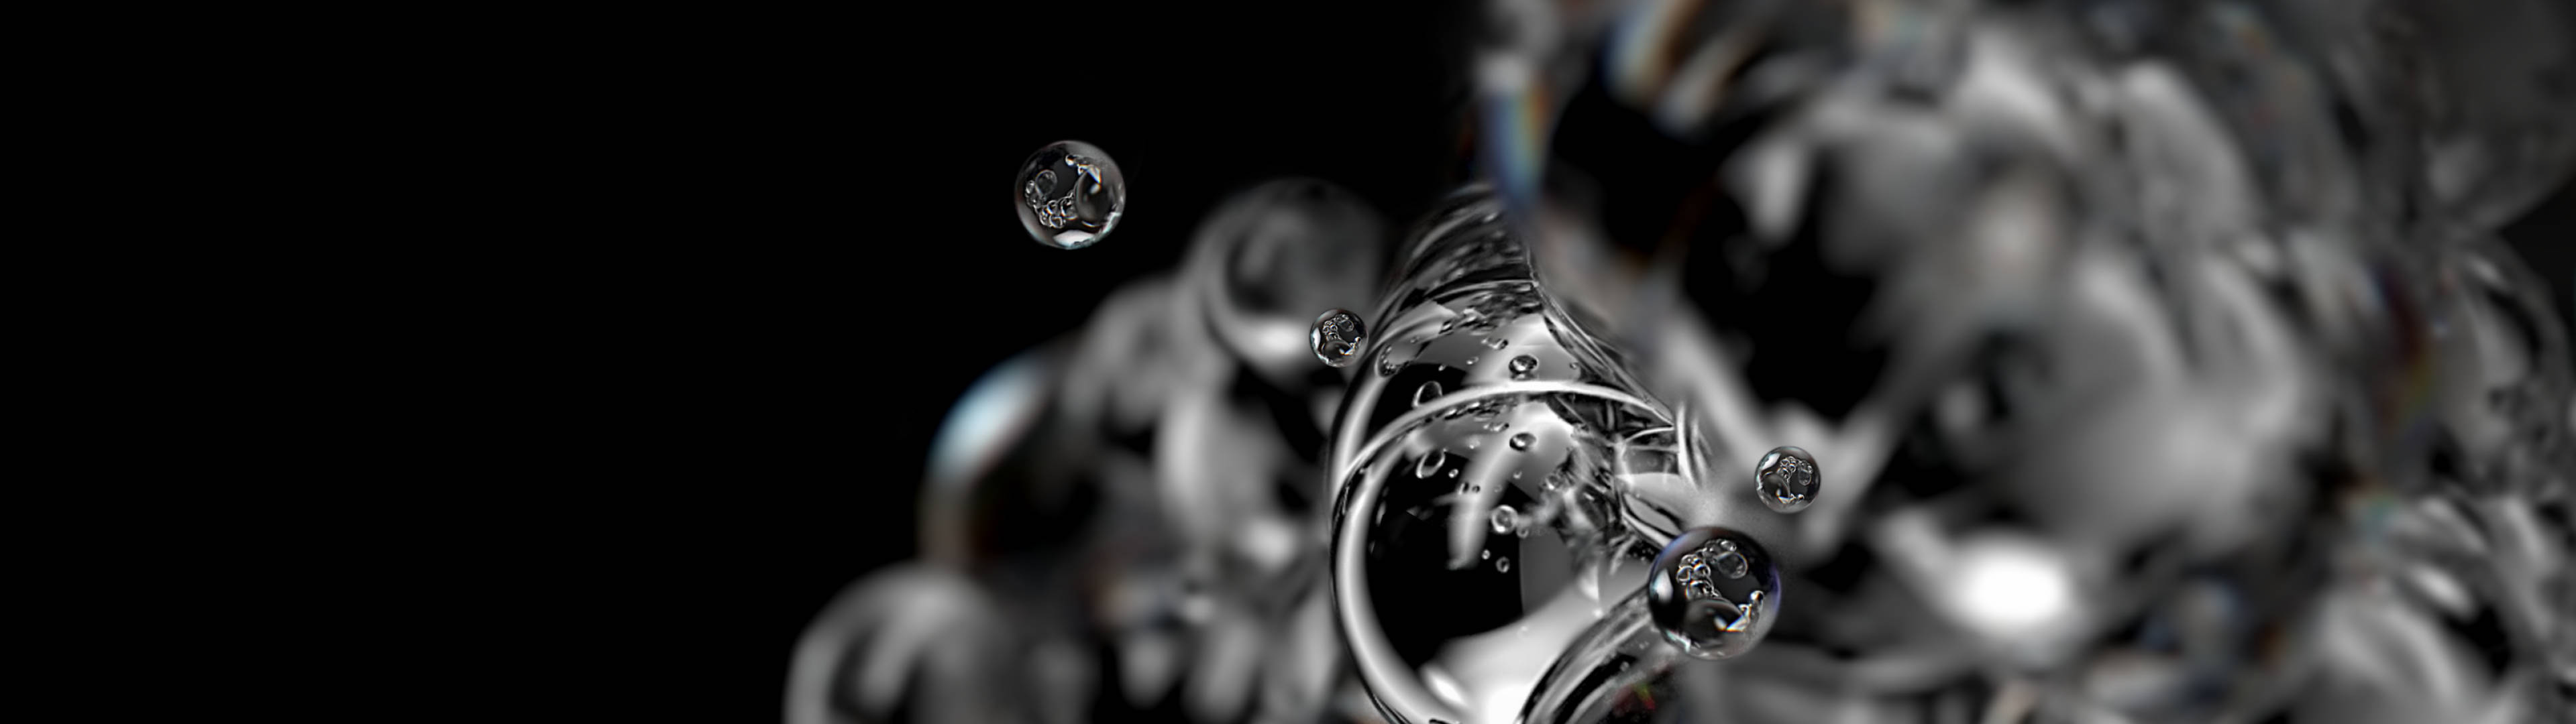 Upward Bubbles 4d Ultra Hd Background